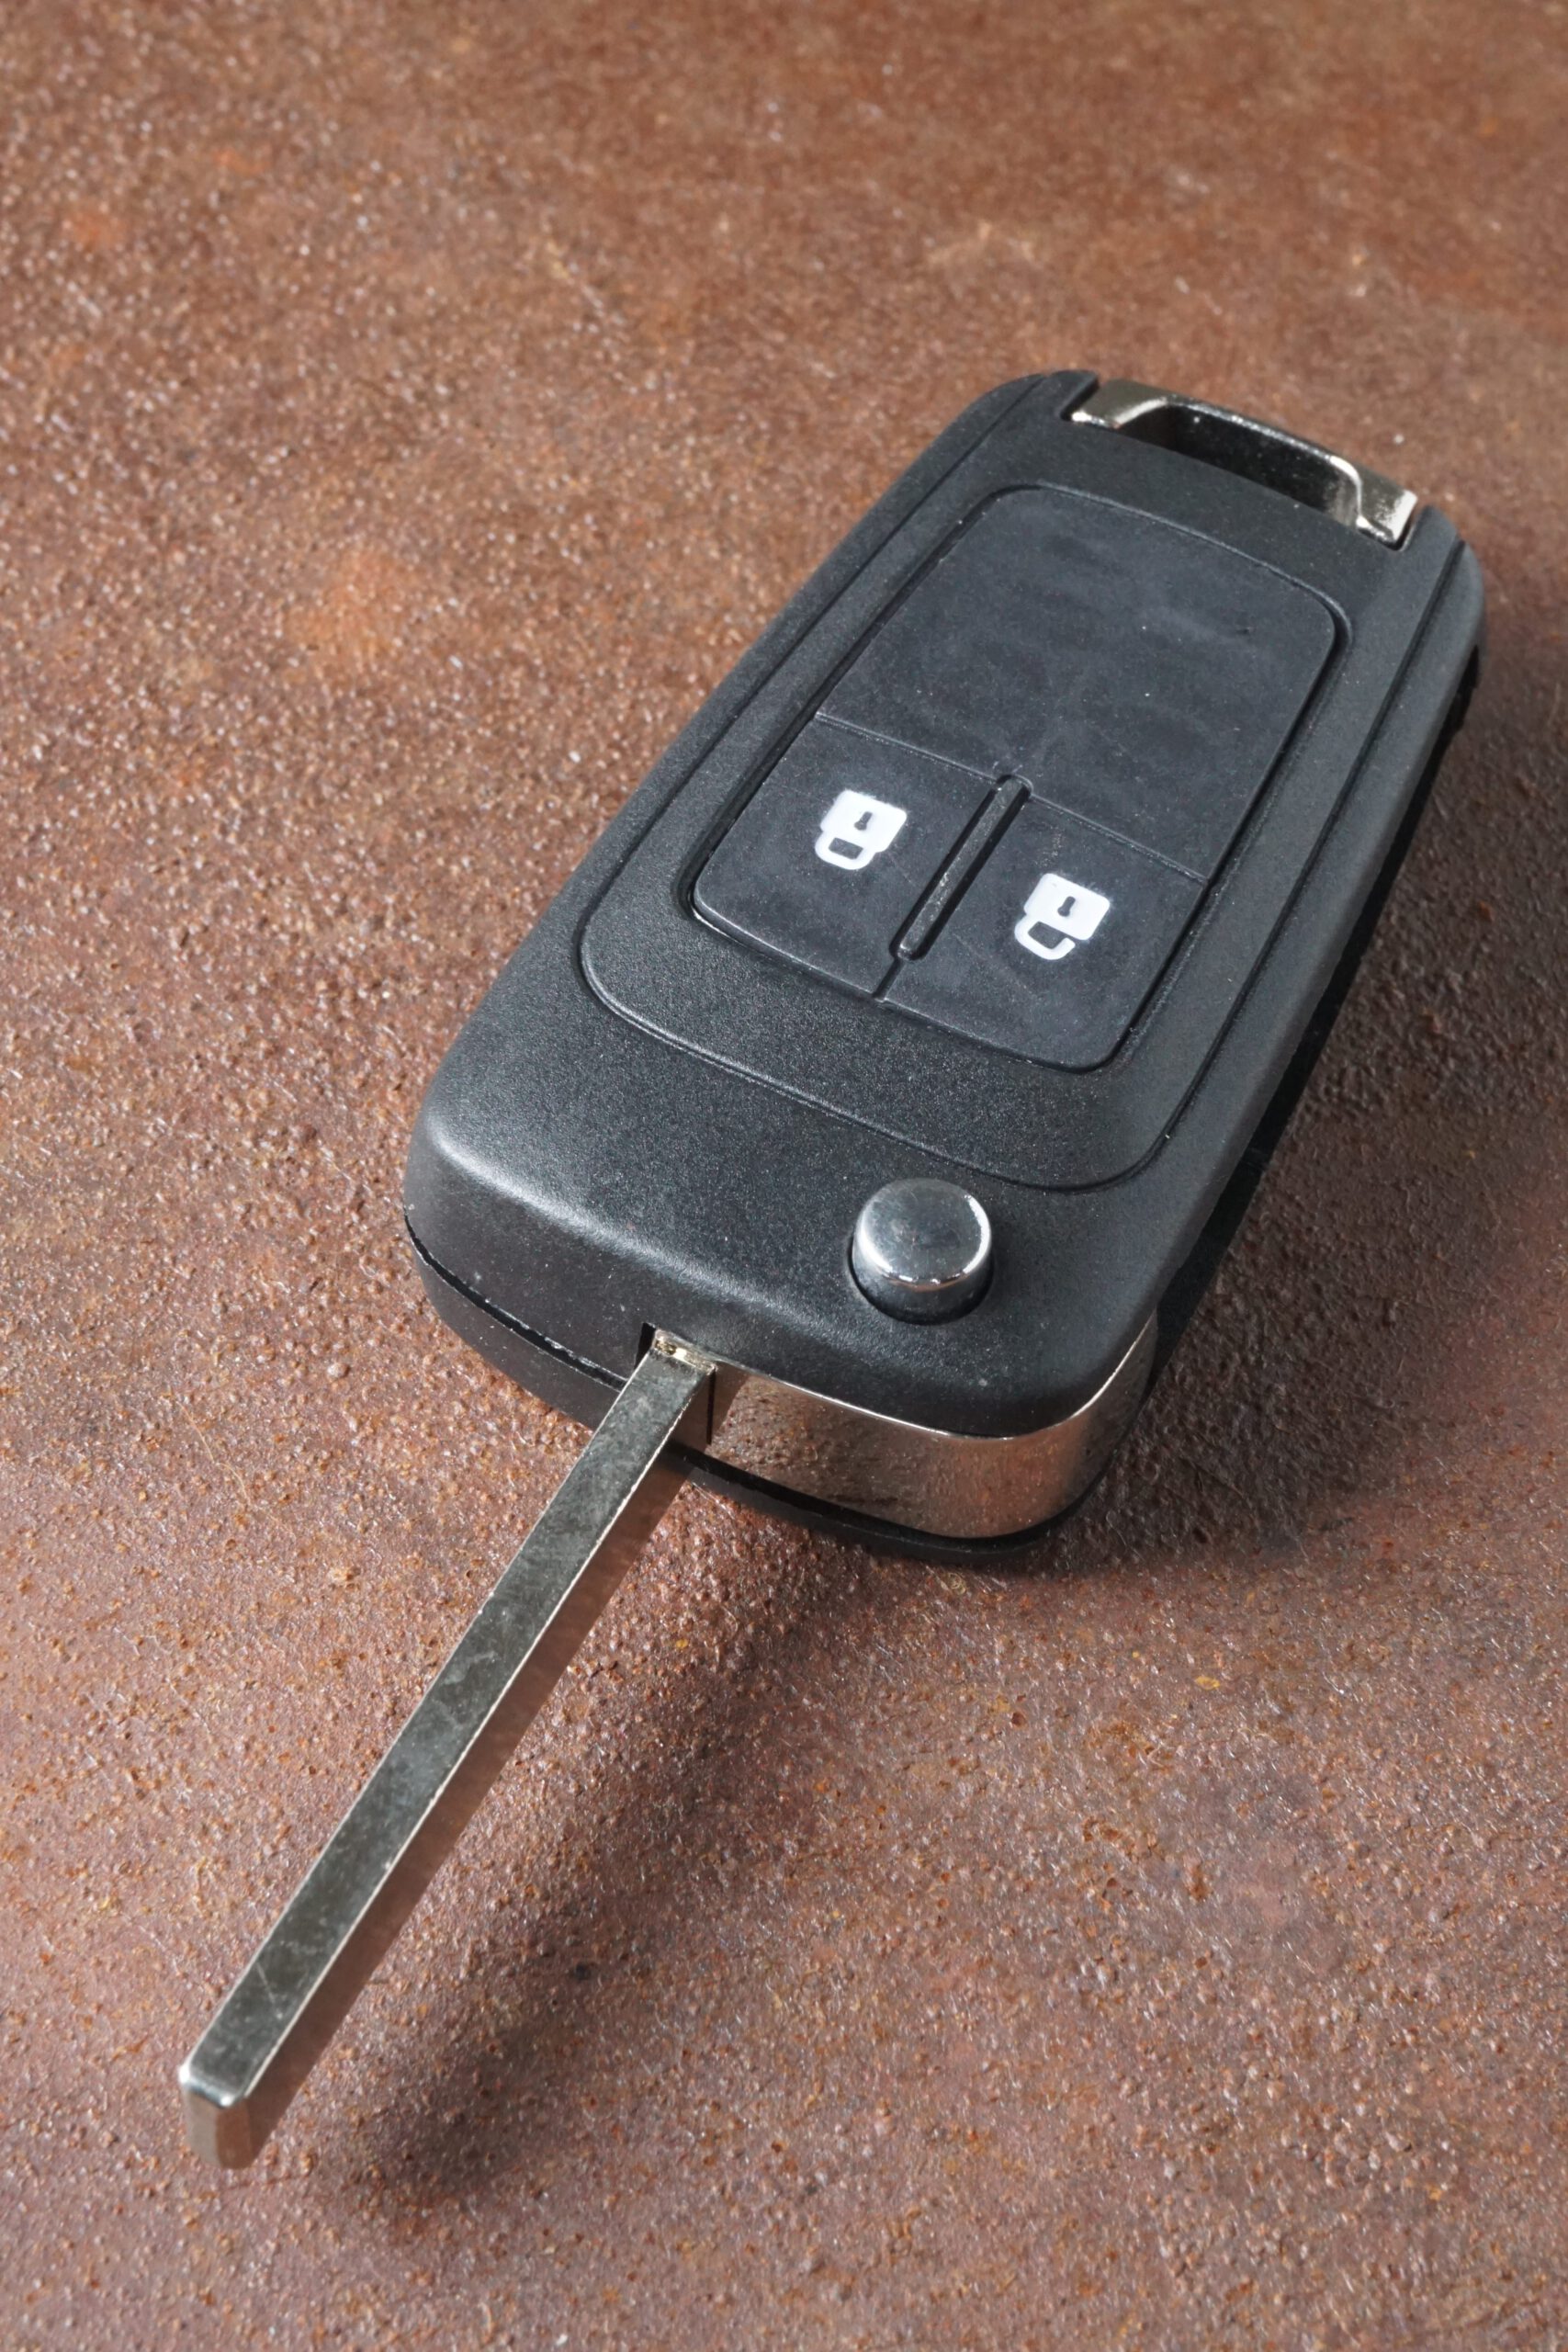 Schlüssel Gehäuse Opel Astra Corsa Zafira Vectra 2 Tasten